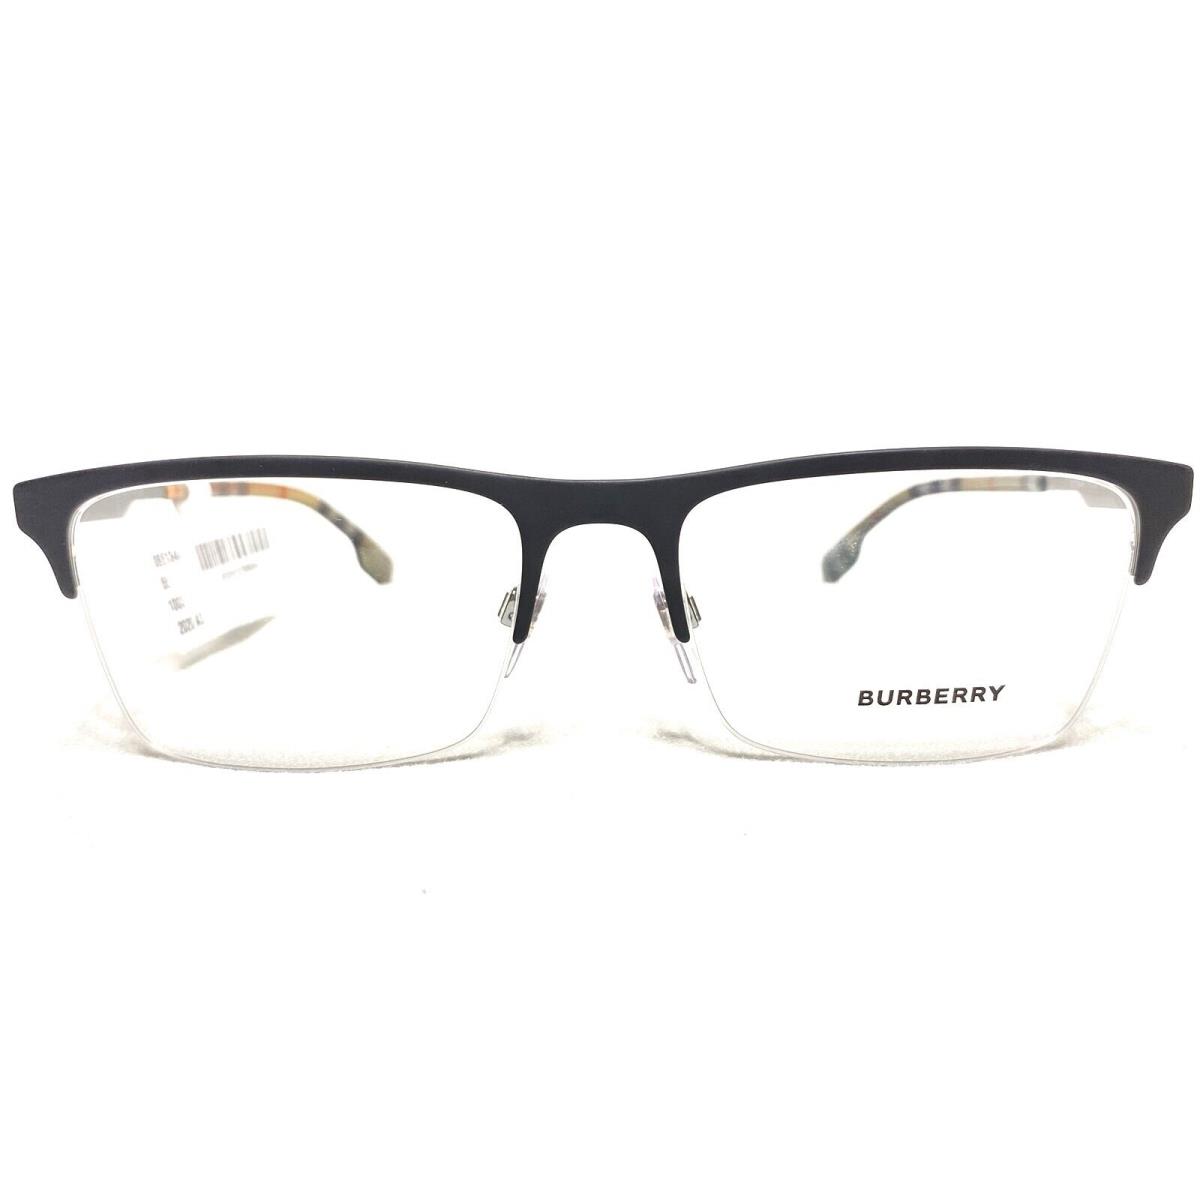 Burberry BE1344 1003 Mens Matte Black Rectangle Eyeglasses Frames 55/18 145 - Matte Black, Frame: Matte Black, Manufacturer: